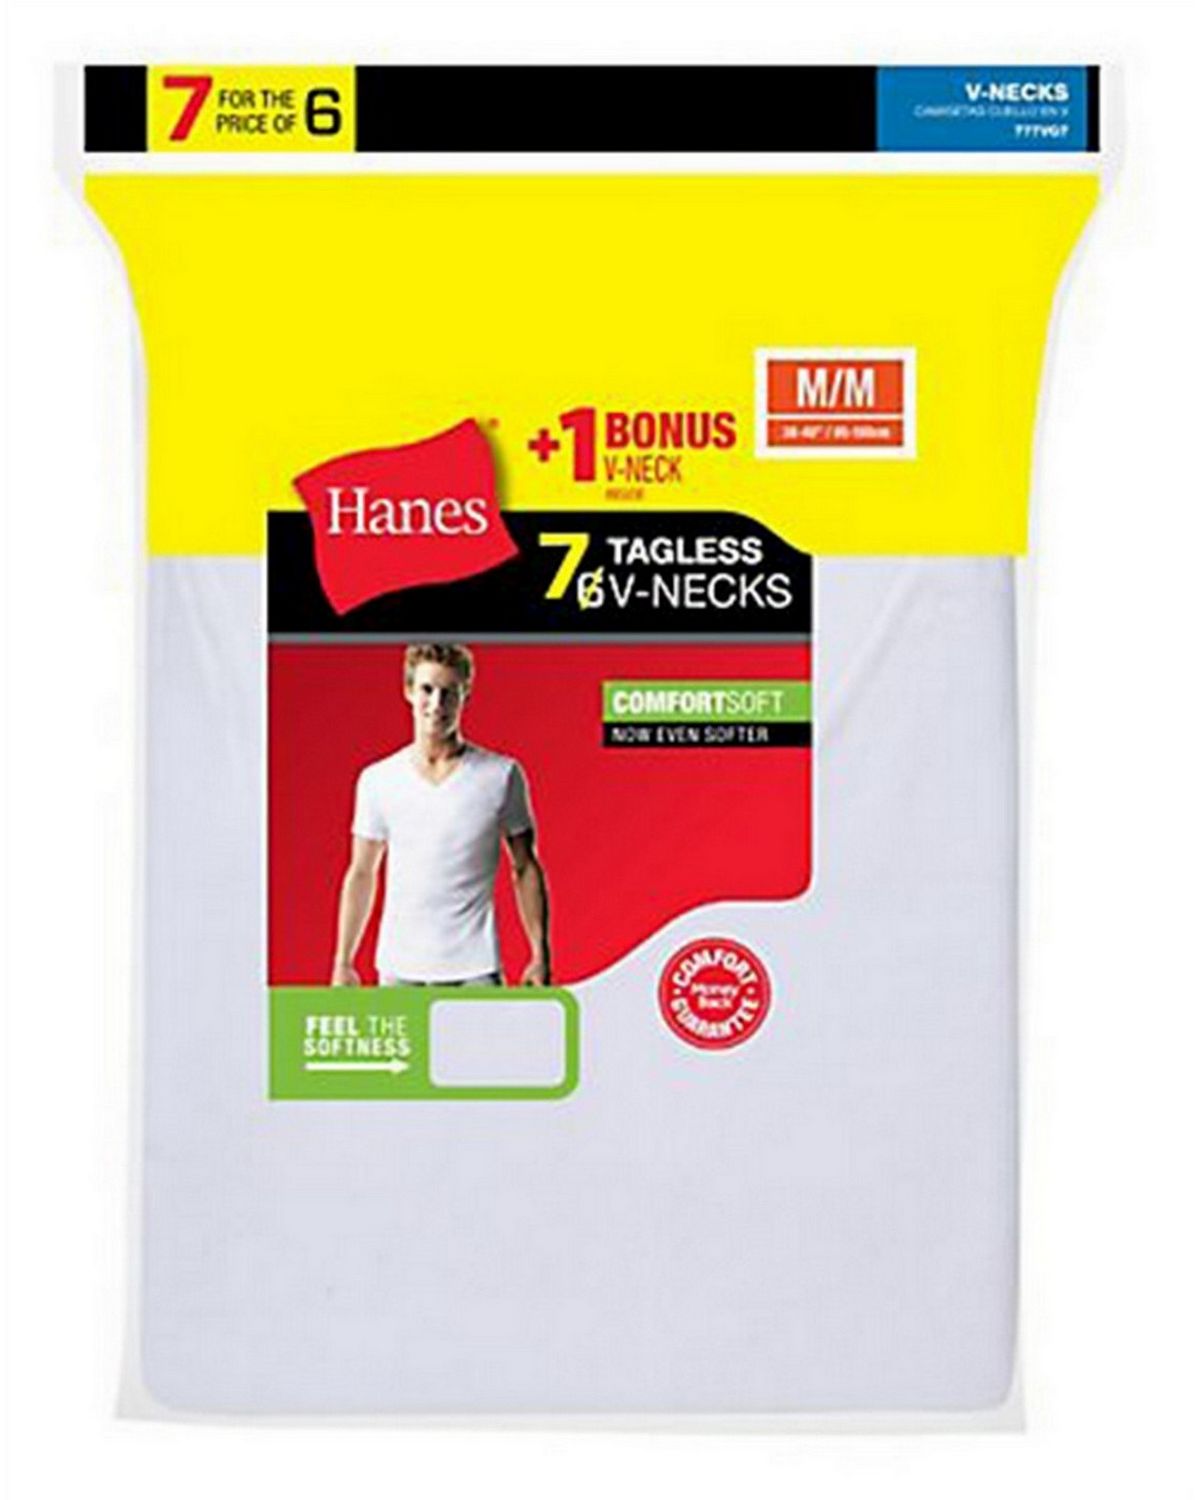 Hanes Mens TAGLESS V-Neck Undershirt 7-Pack (Includes 1 Free Bonus V-Neck)-777VG7